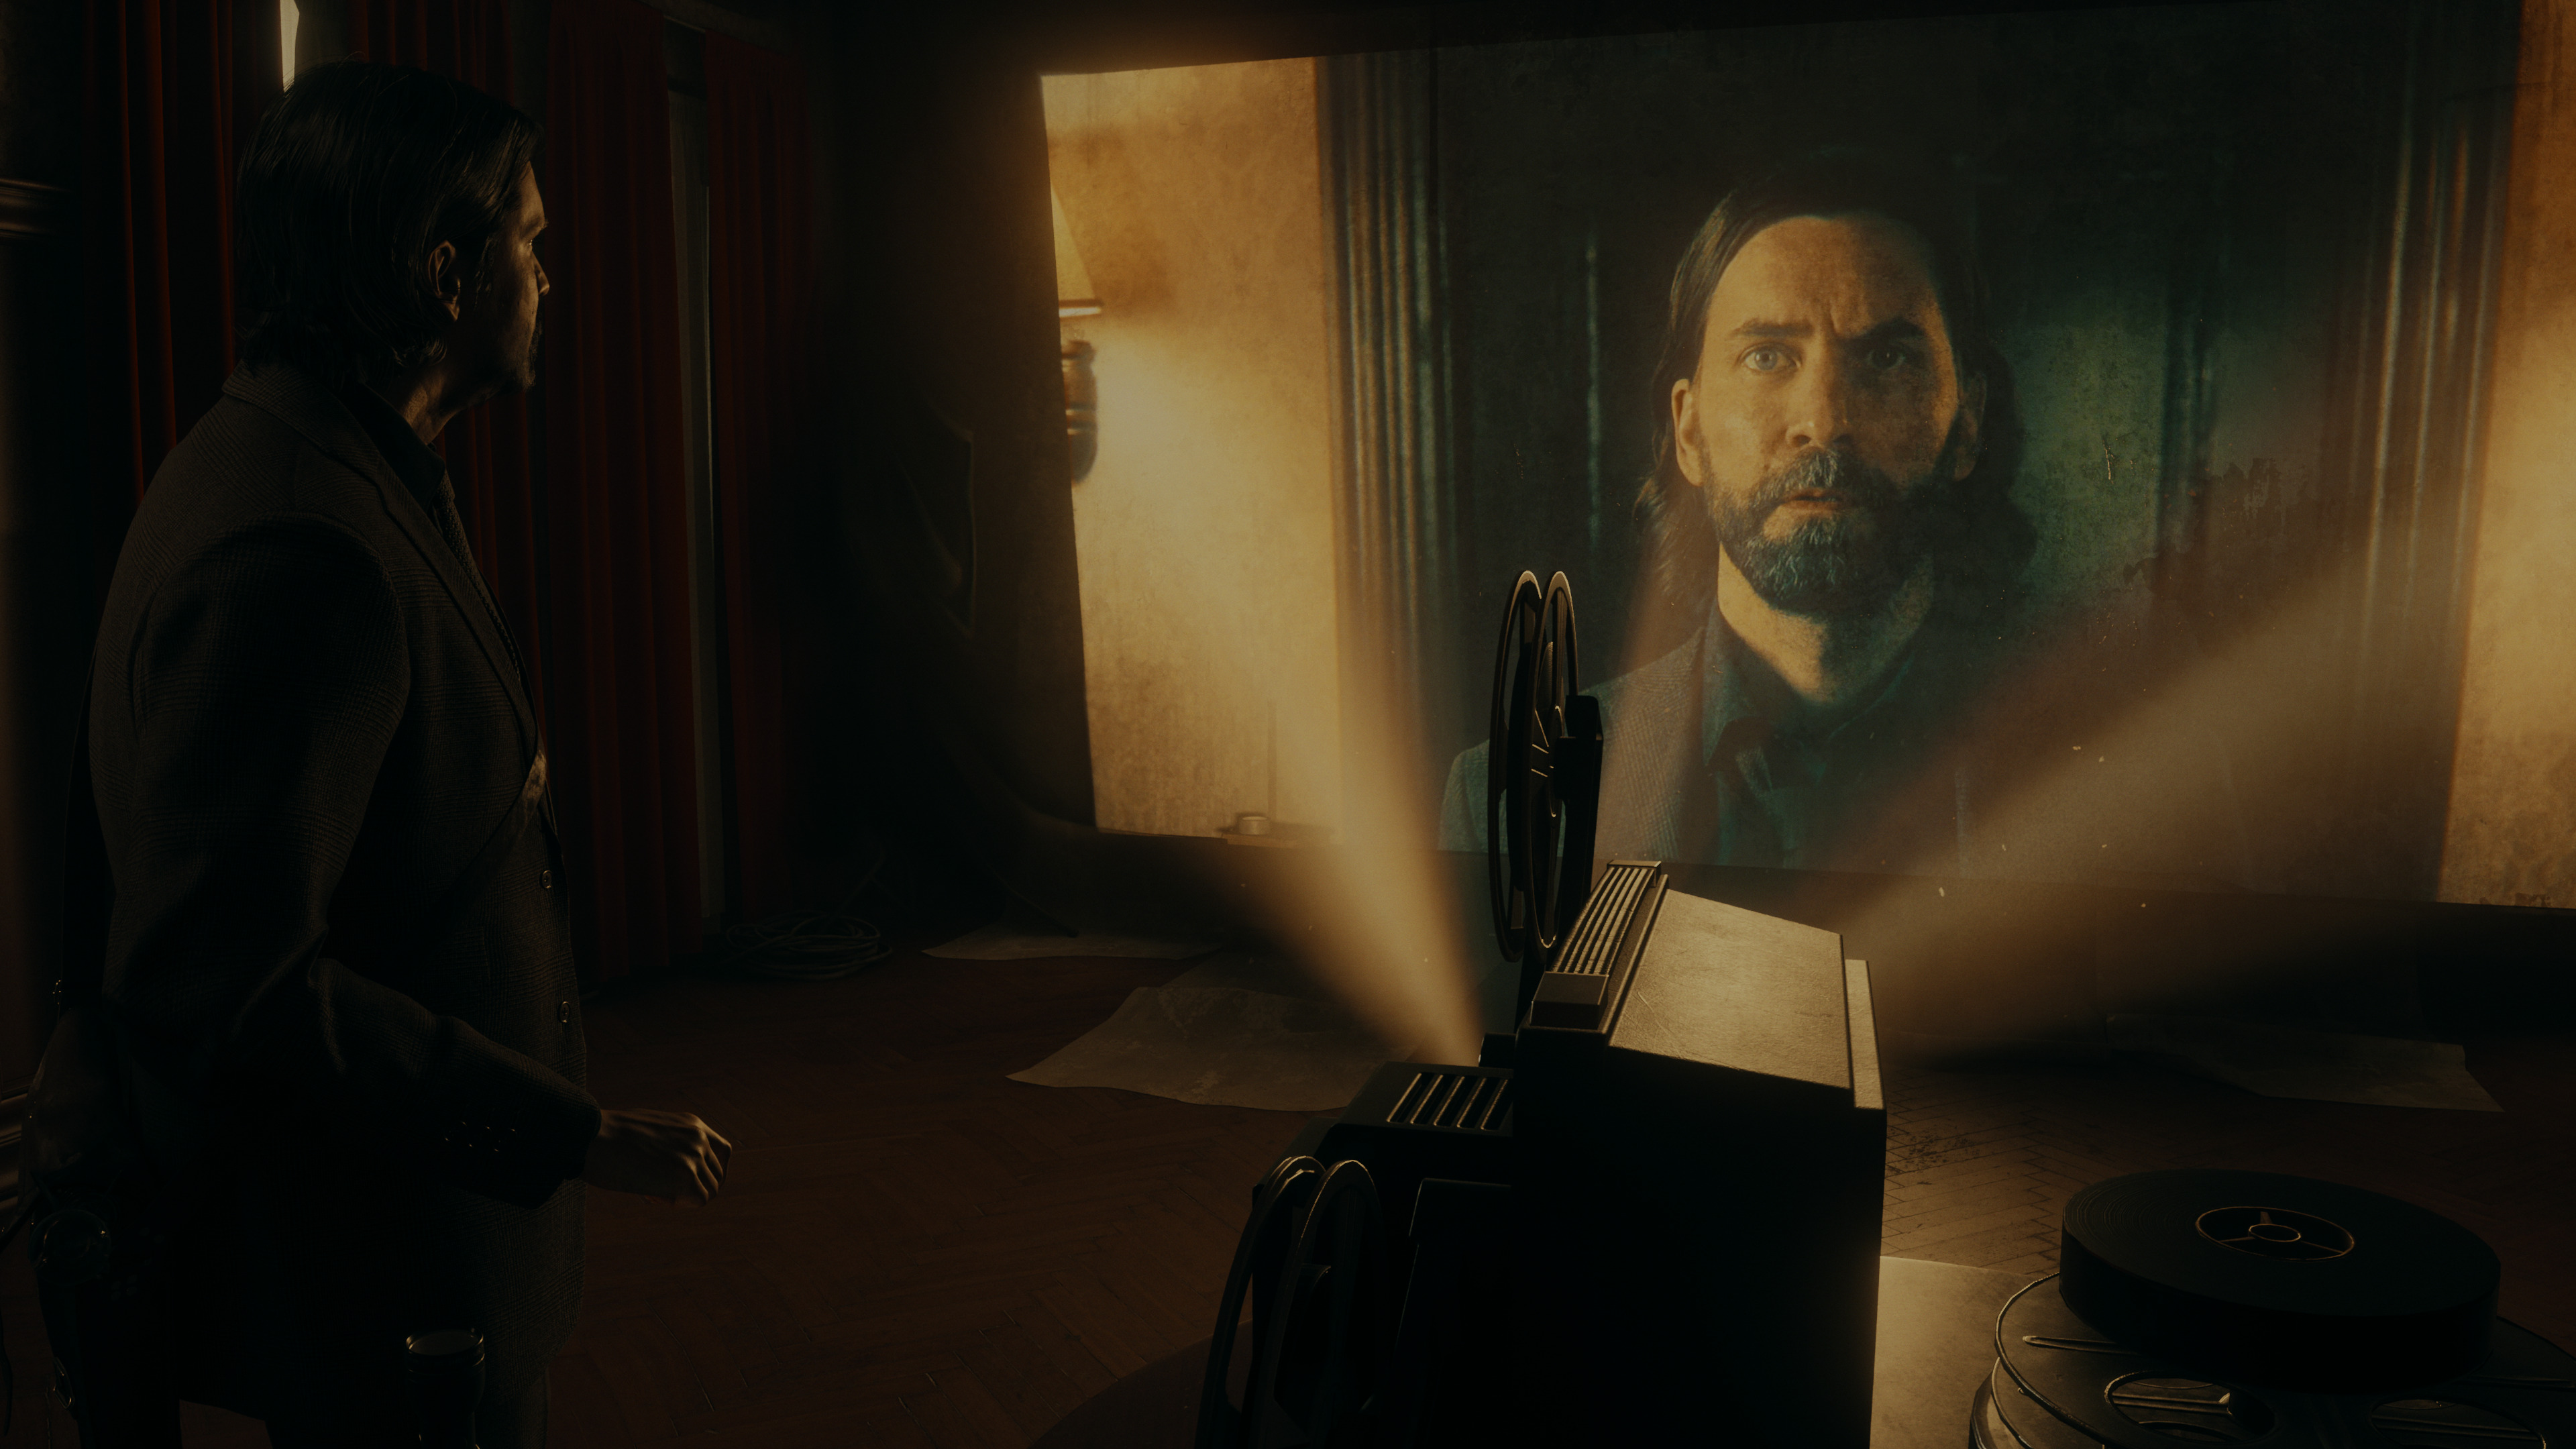 Alan Wake II' is culmination of 'Control,' 'Quantum Break,' and more